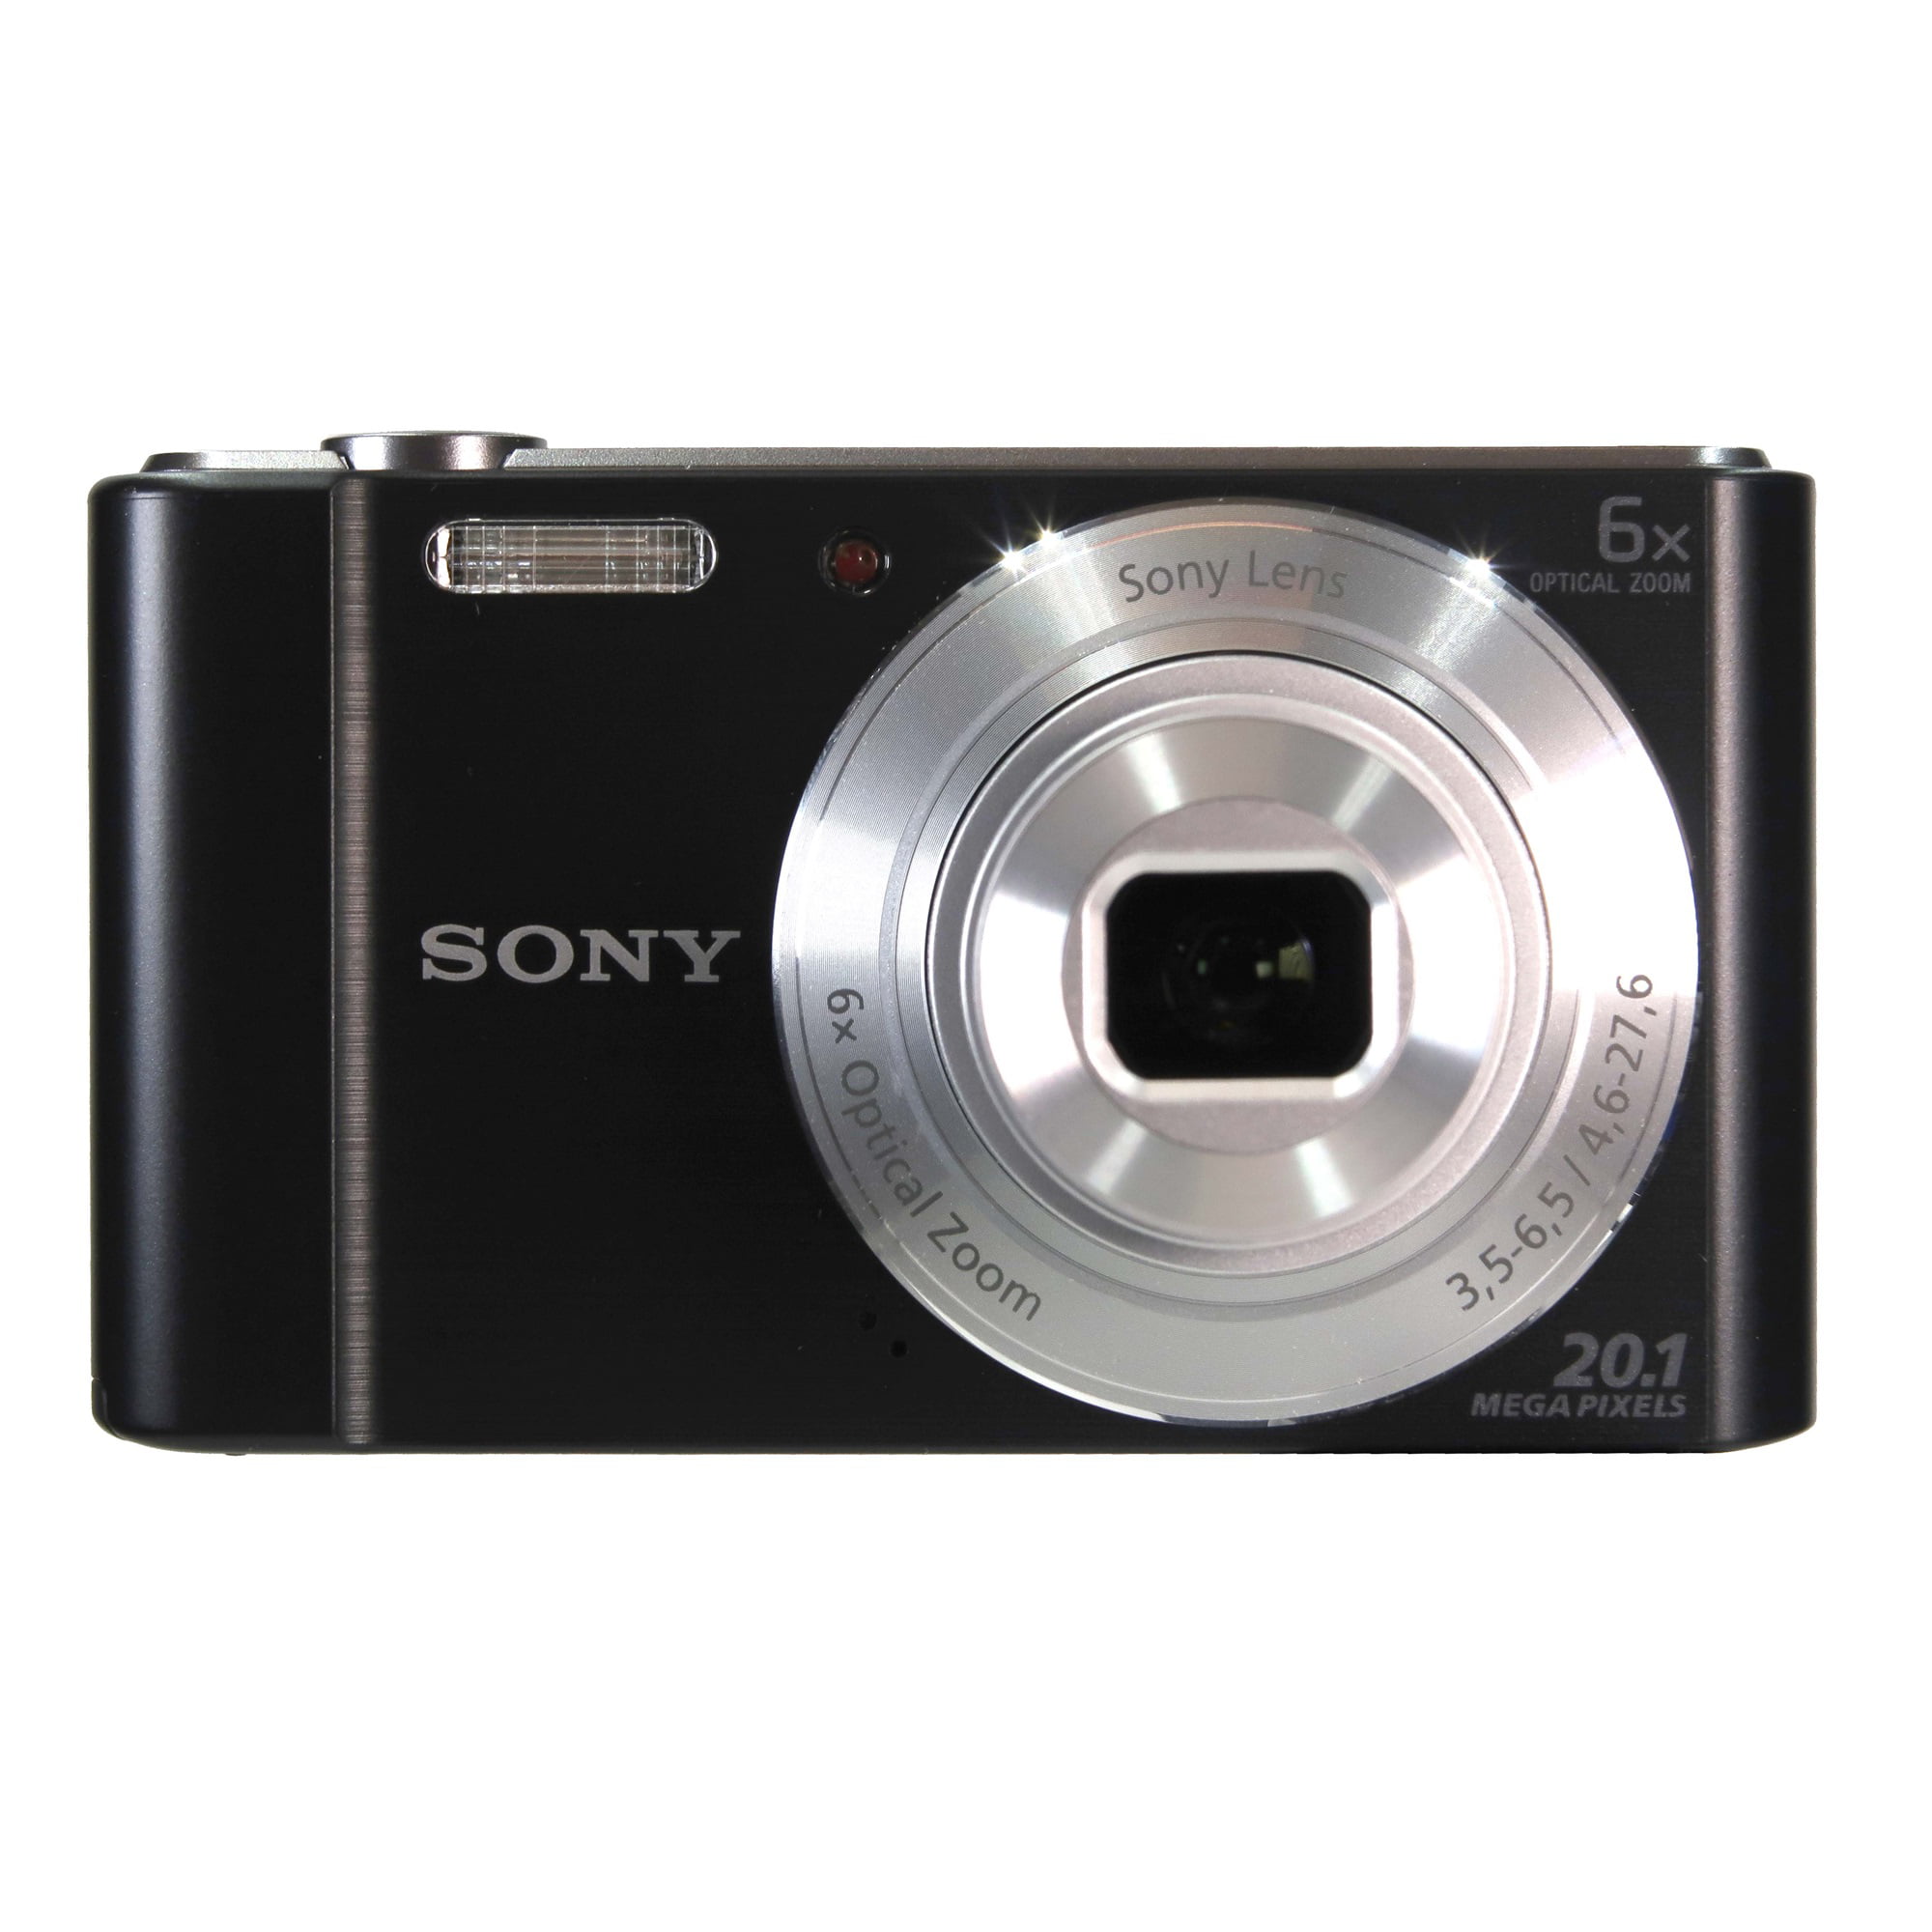 Sony Cyber-shot DSC-W810 Digital Camera Black - Walmart.com